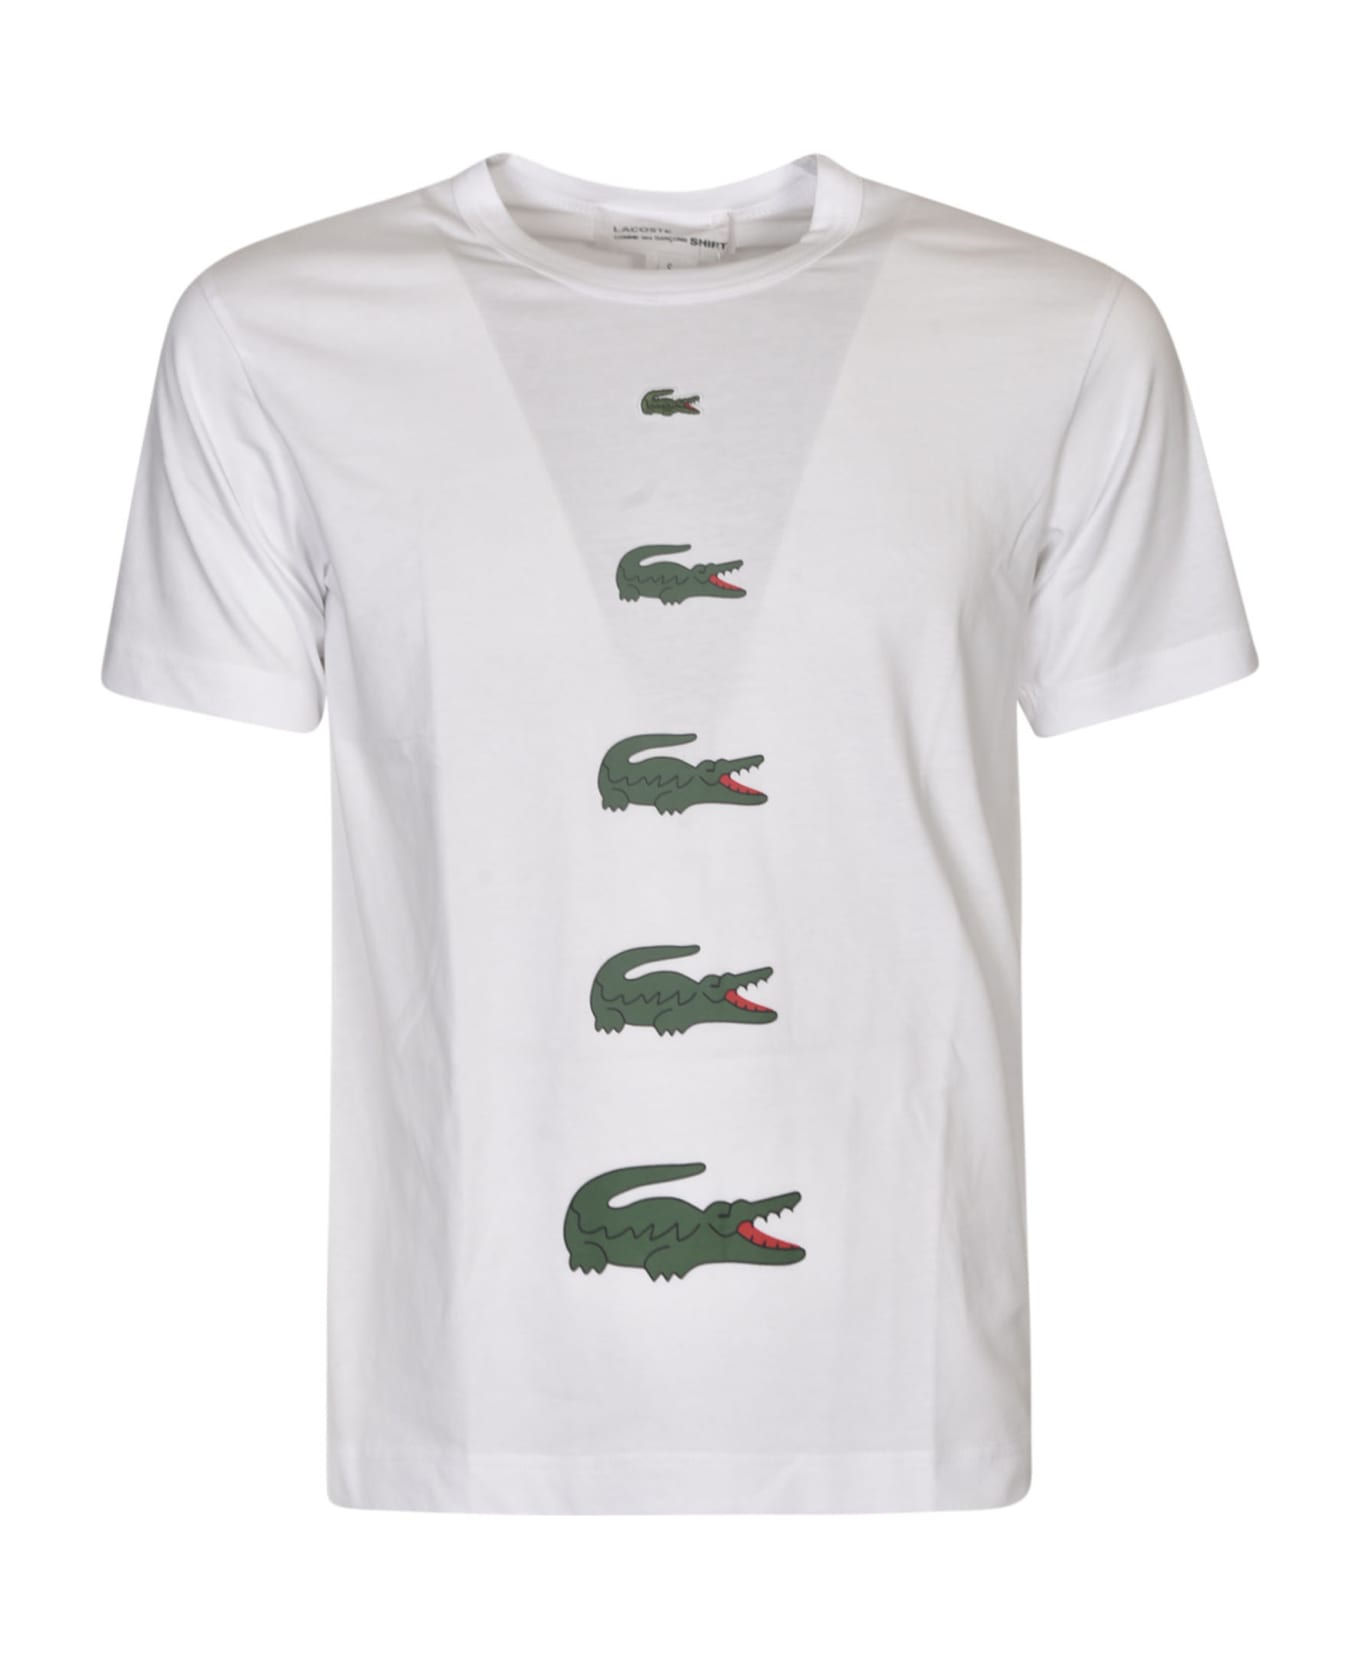 Comme des Garçons Croco Embroidered T-shirt - White